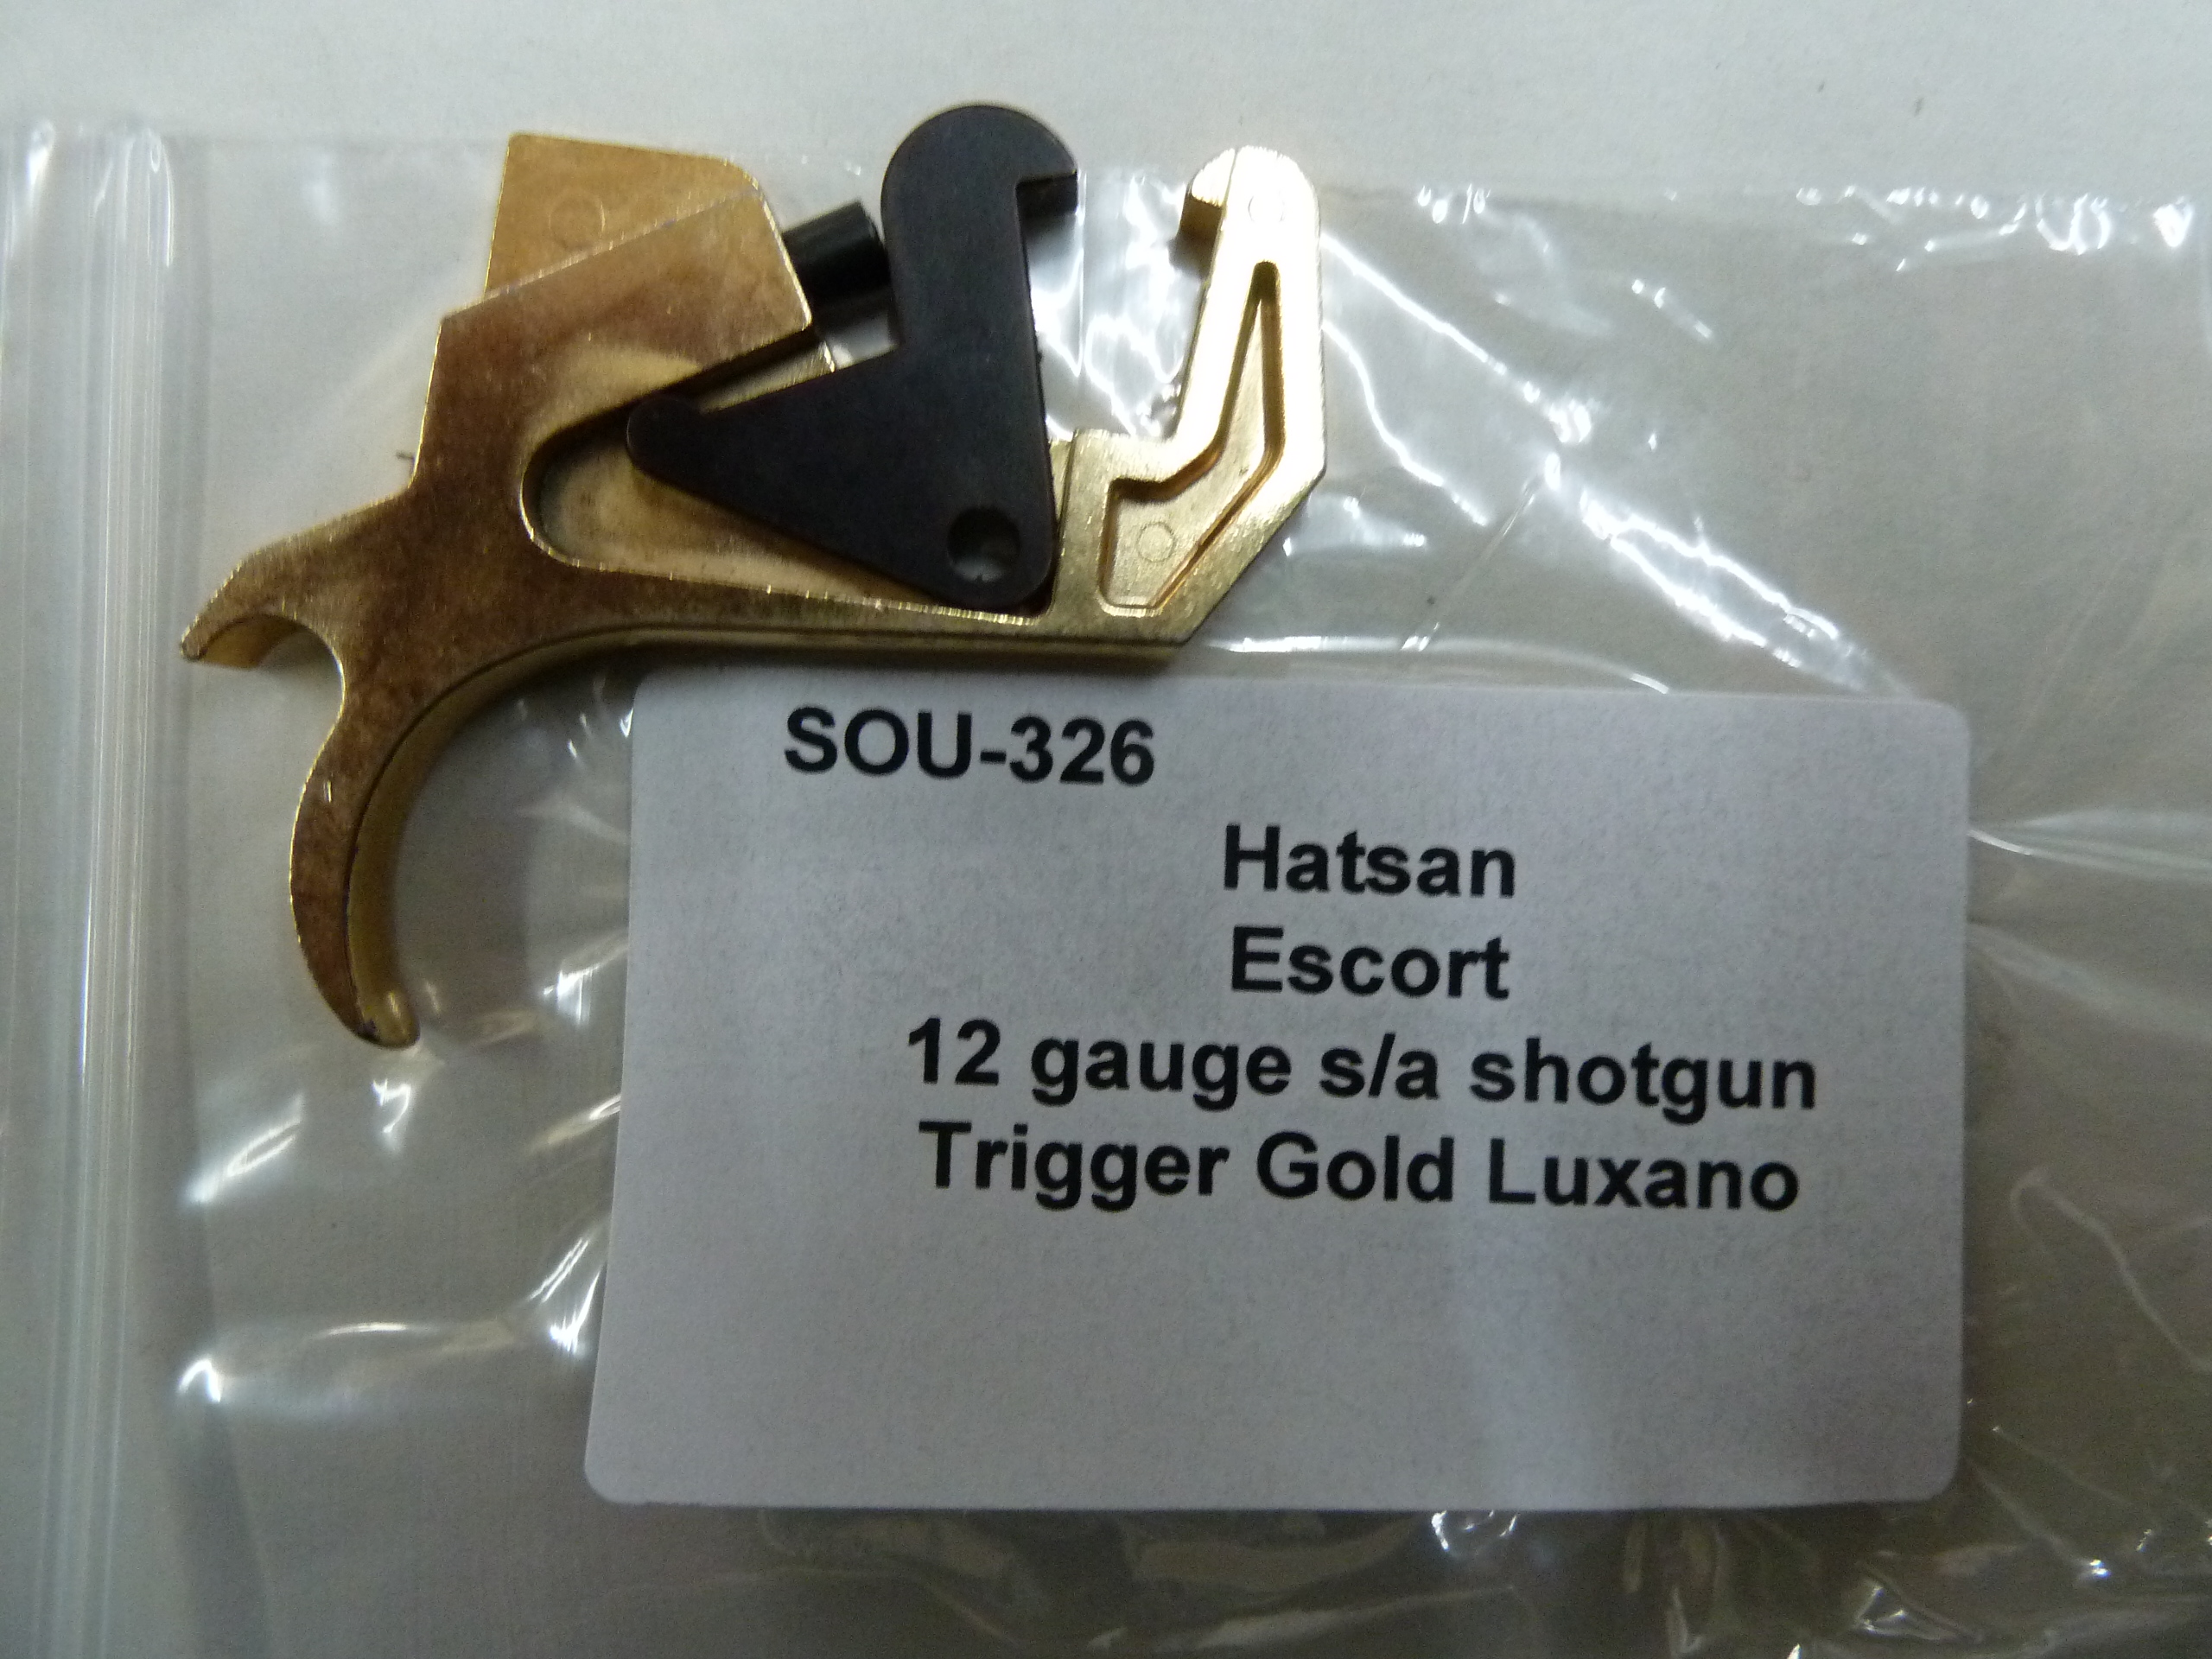 Hatsan Escort Trigger Gold Luxano